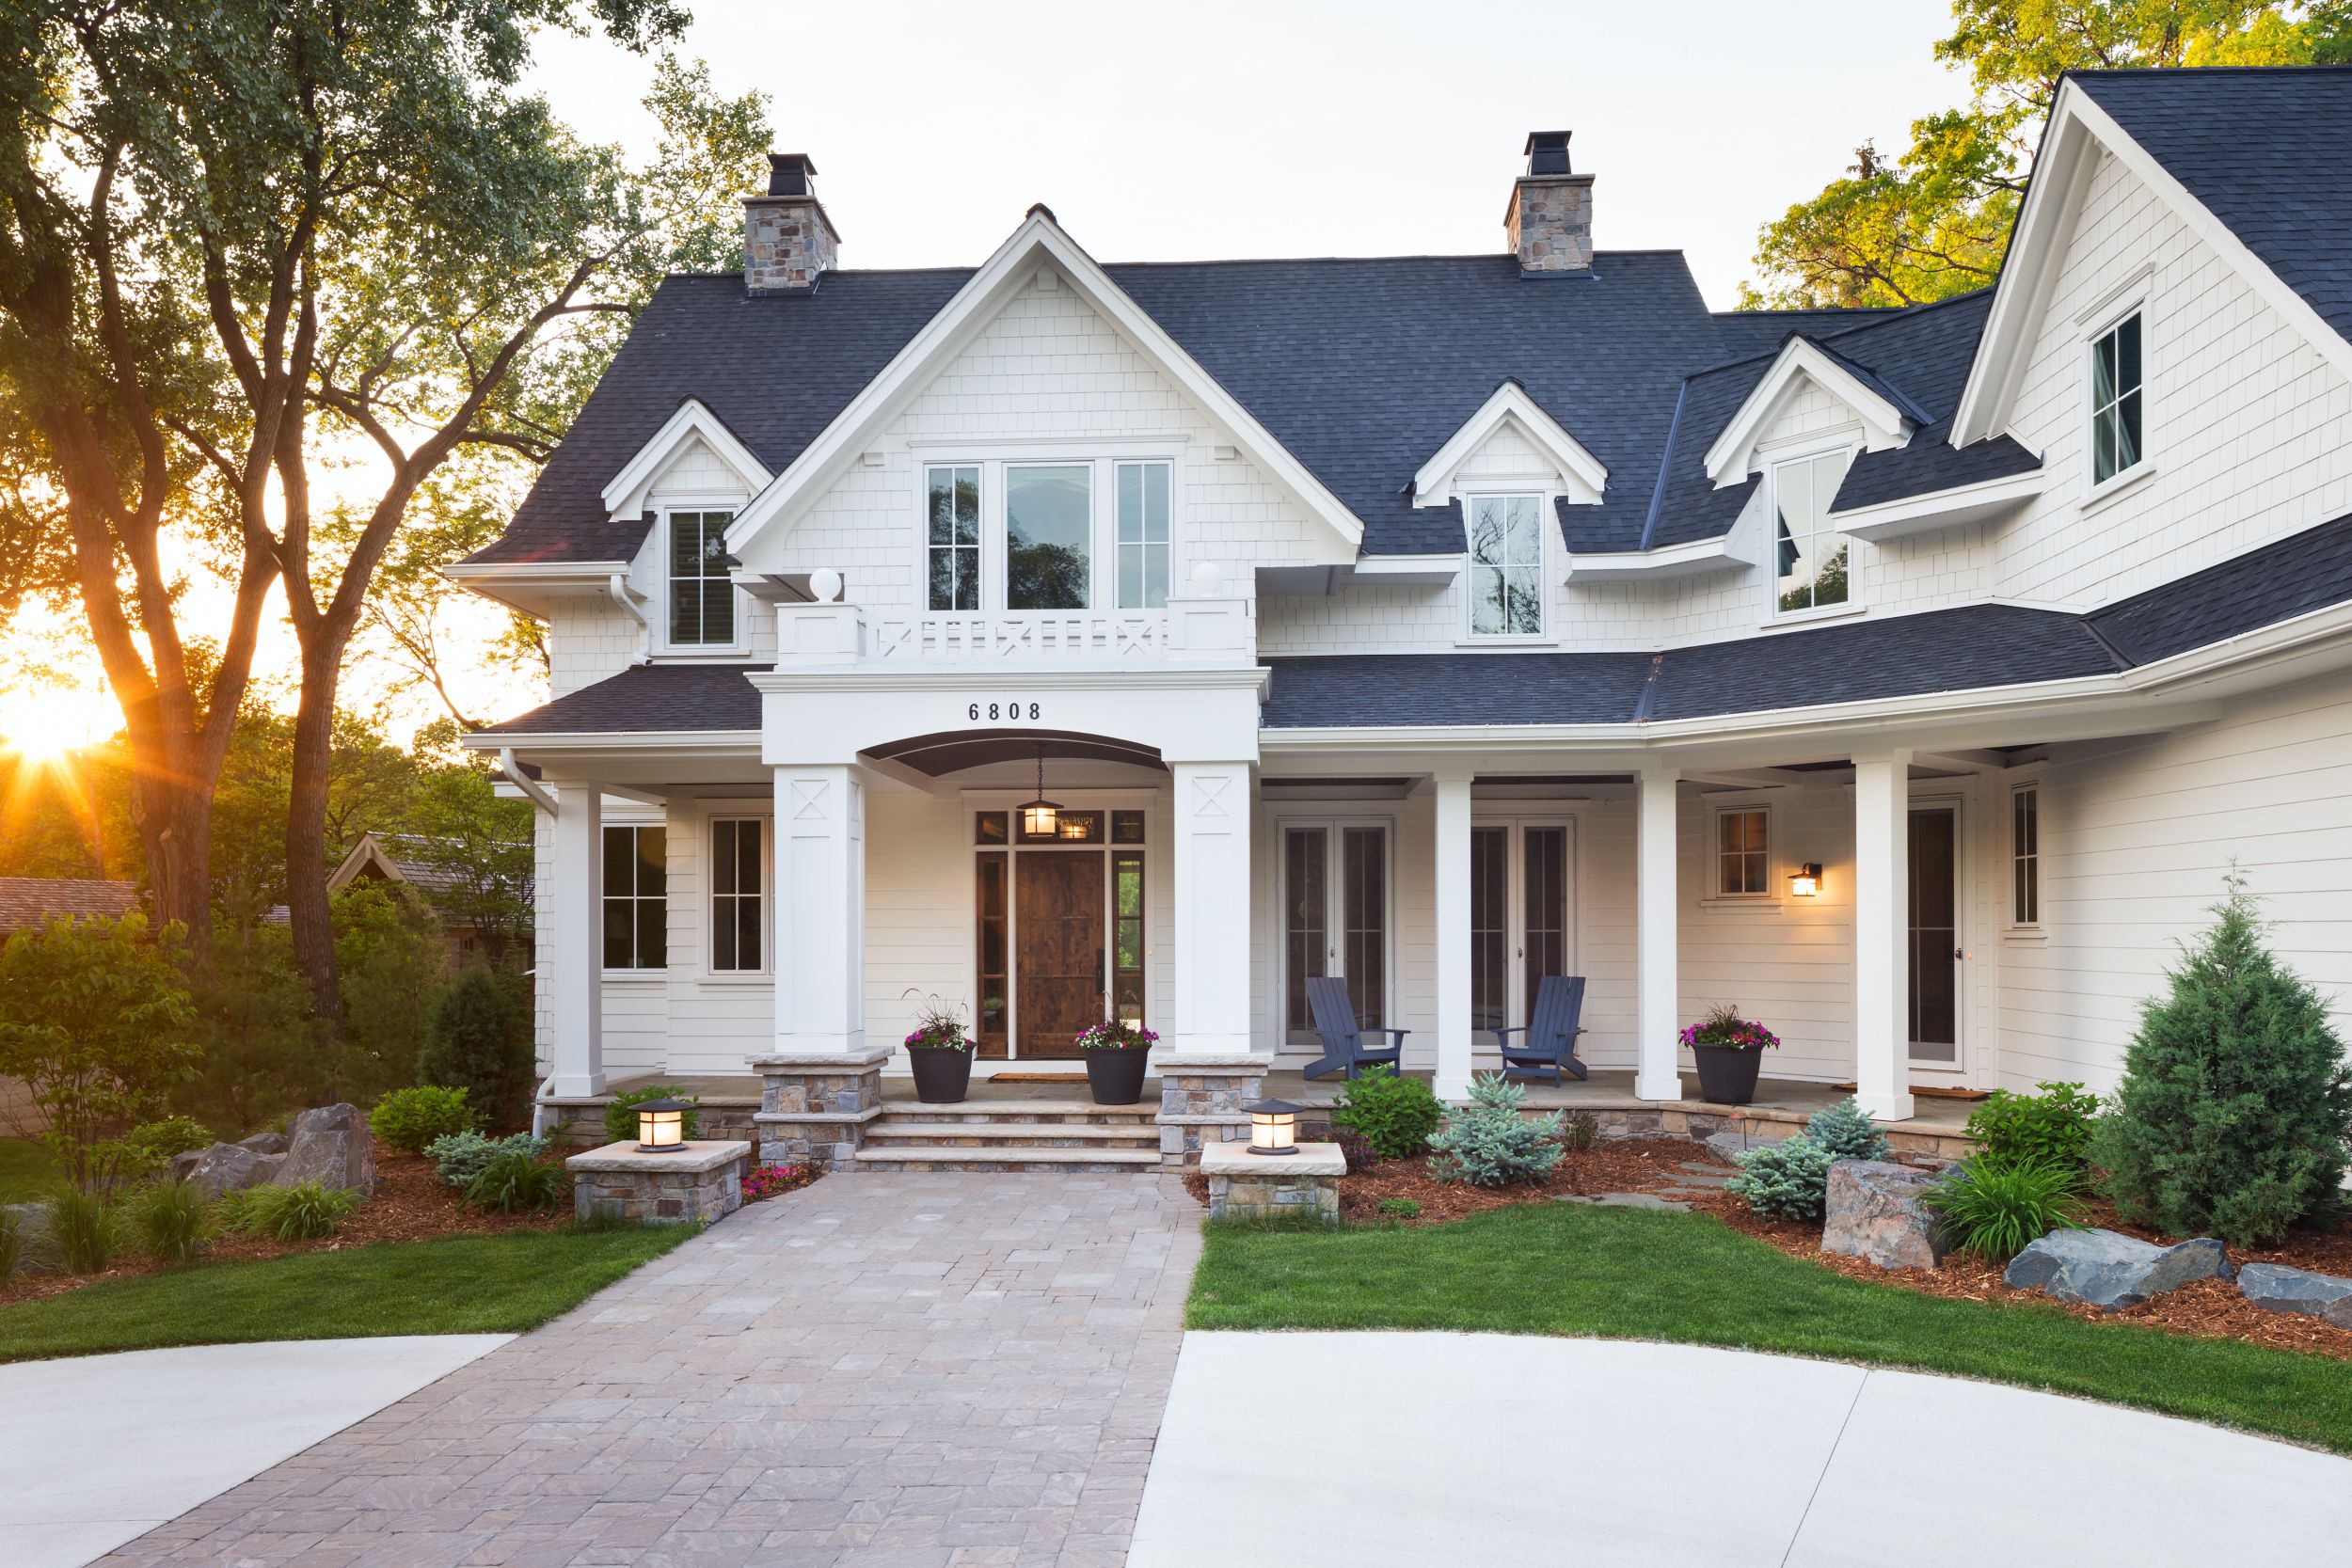 White Traditional Home - Great Neighborhood Homes